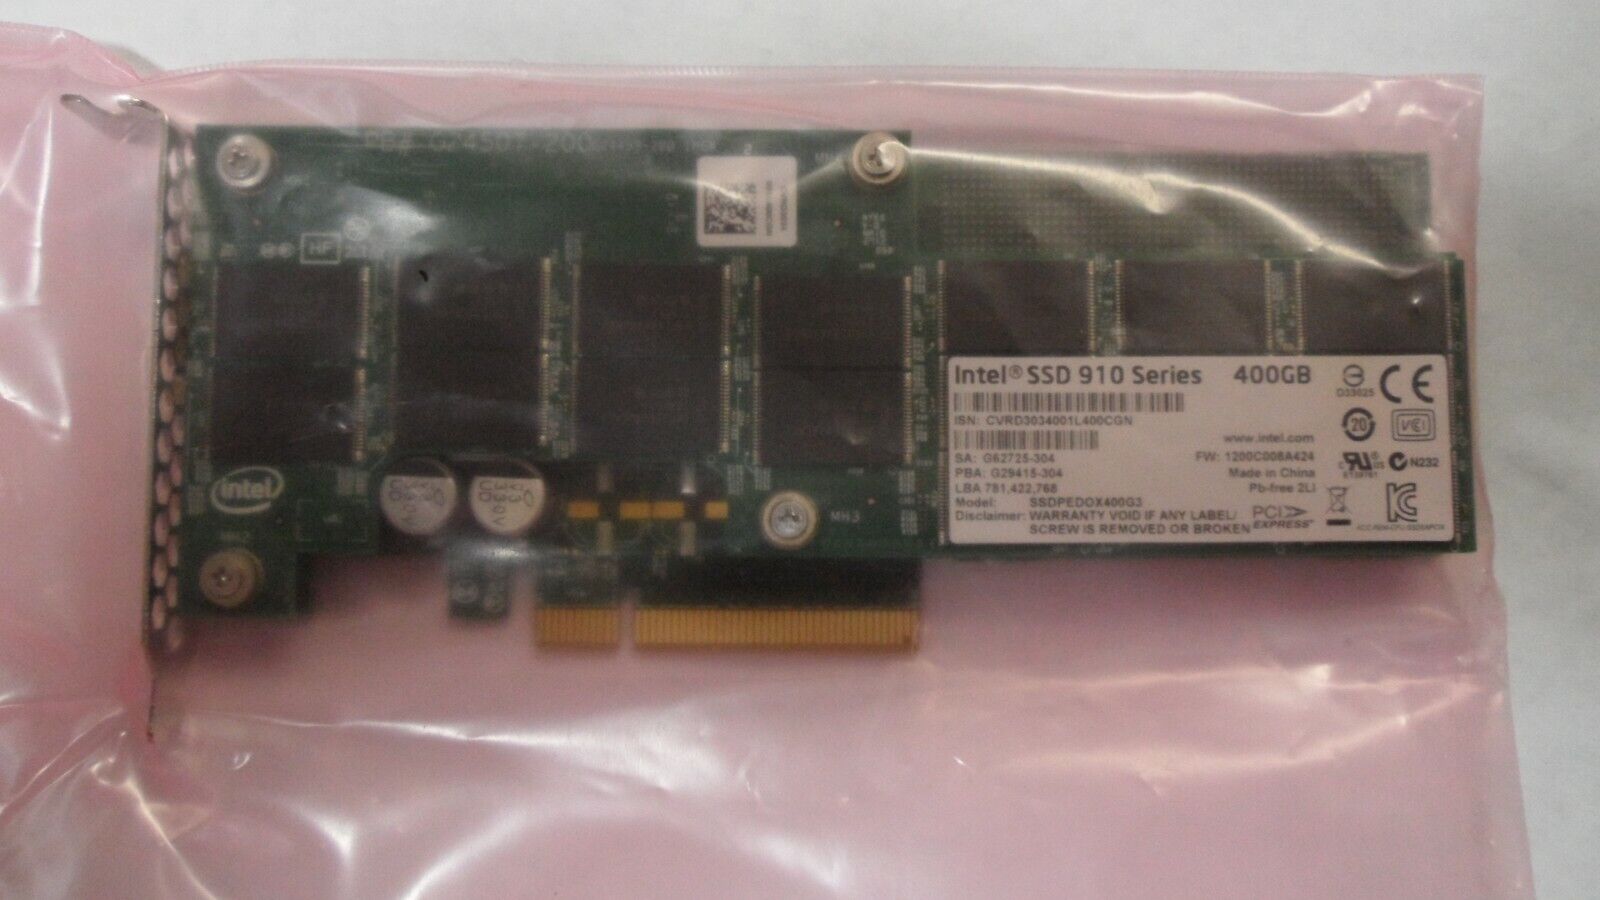 Intel SSDPEDOX400G3 400GB PCI-E SSD 910 Series Solid State Drive High Profile